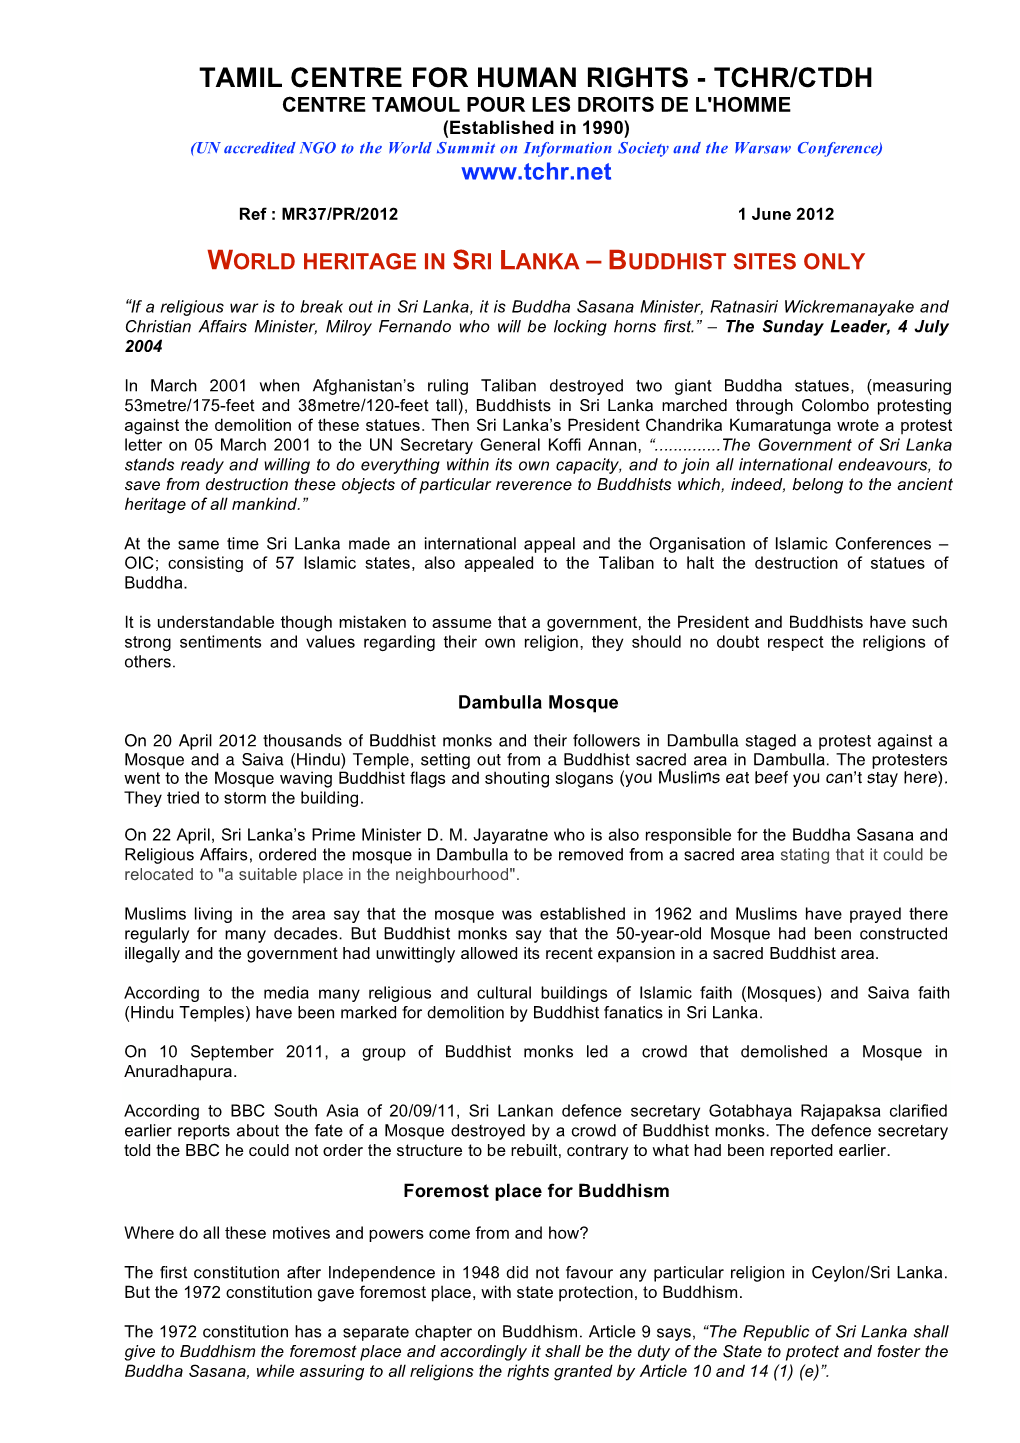 World Heritage in Sri Lanka – Buddhist Sites Only